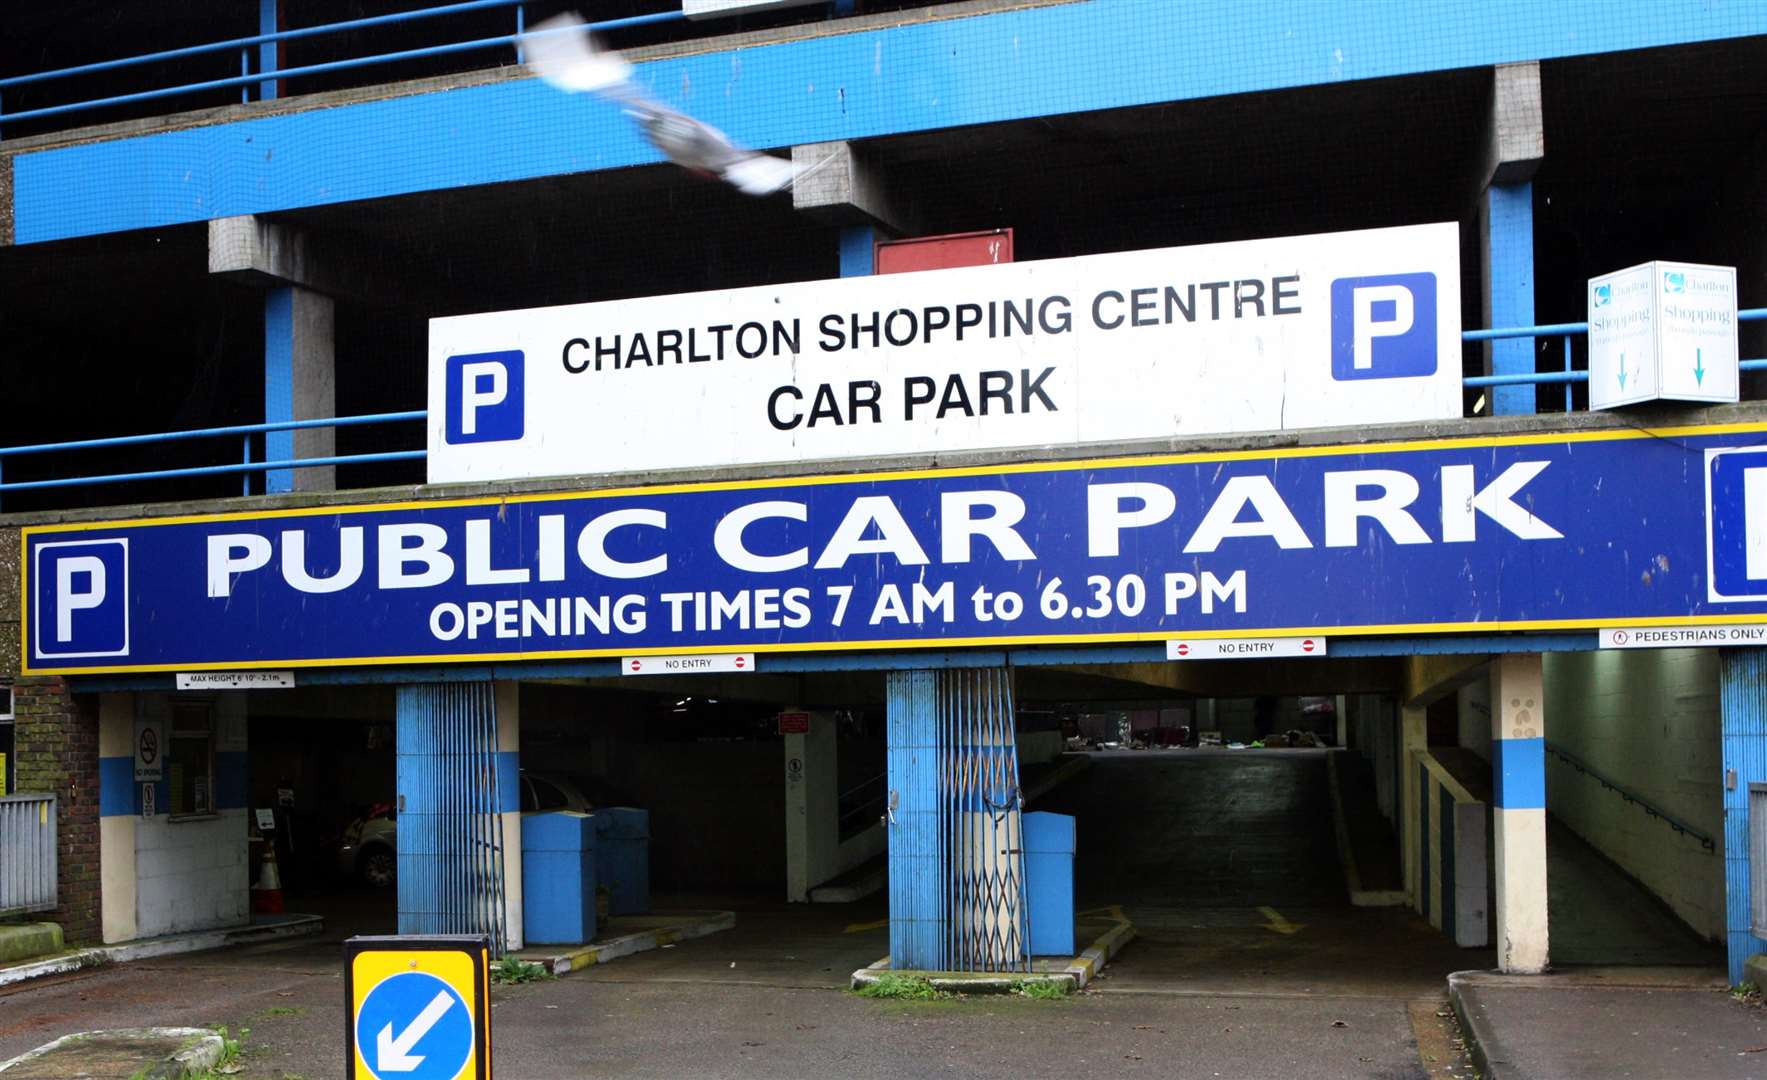 The Charlton centre car park. Library image